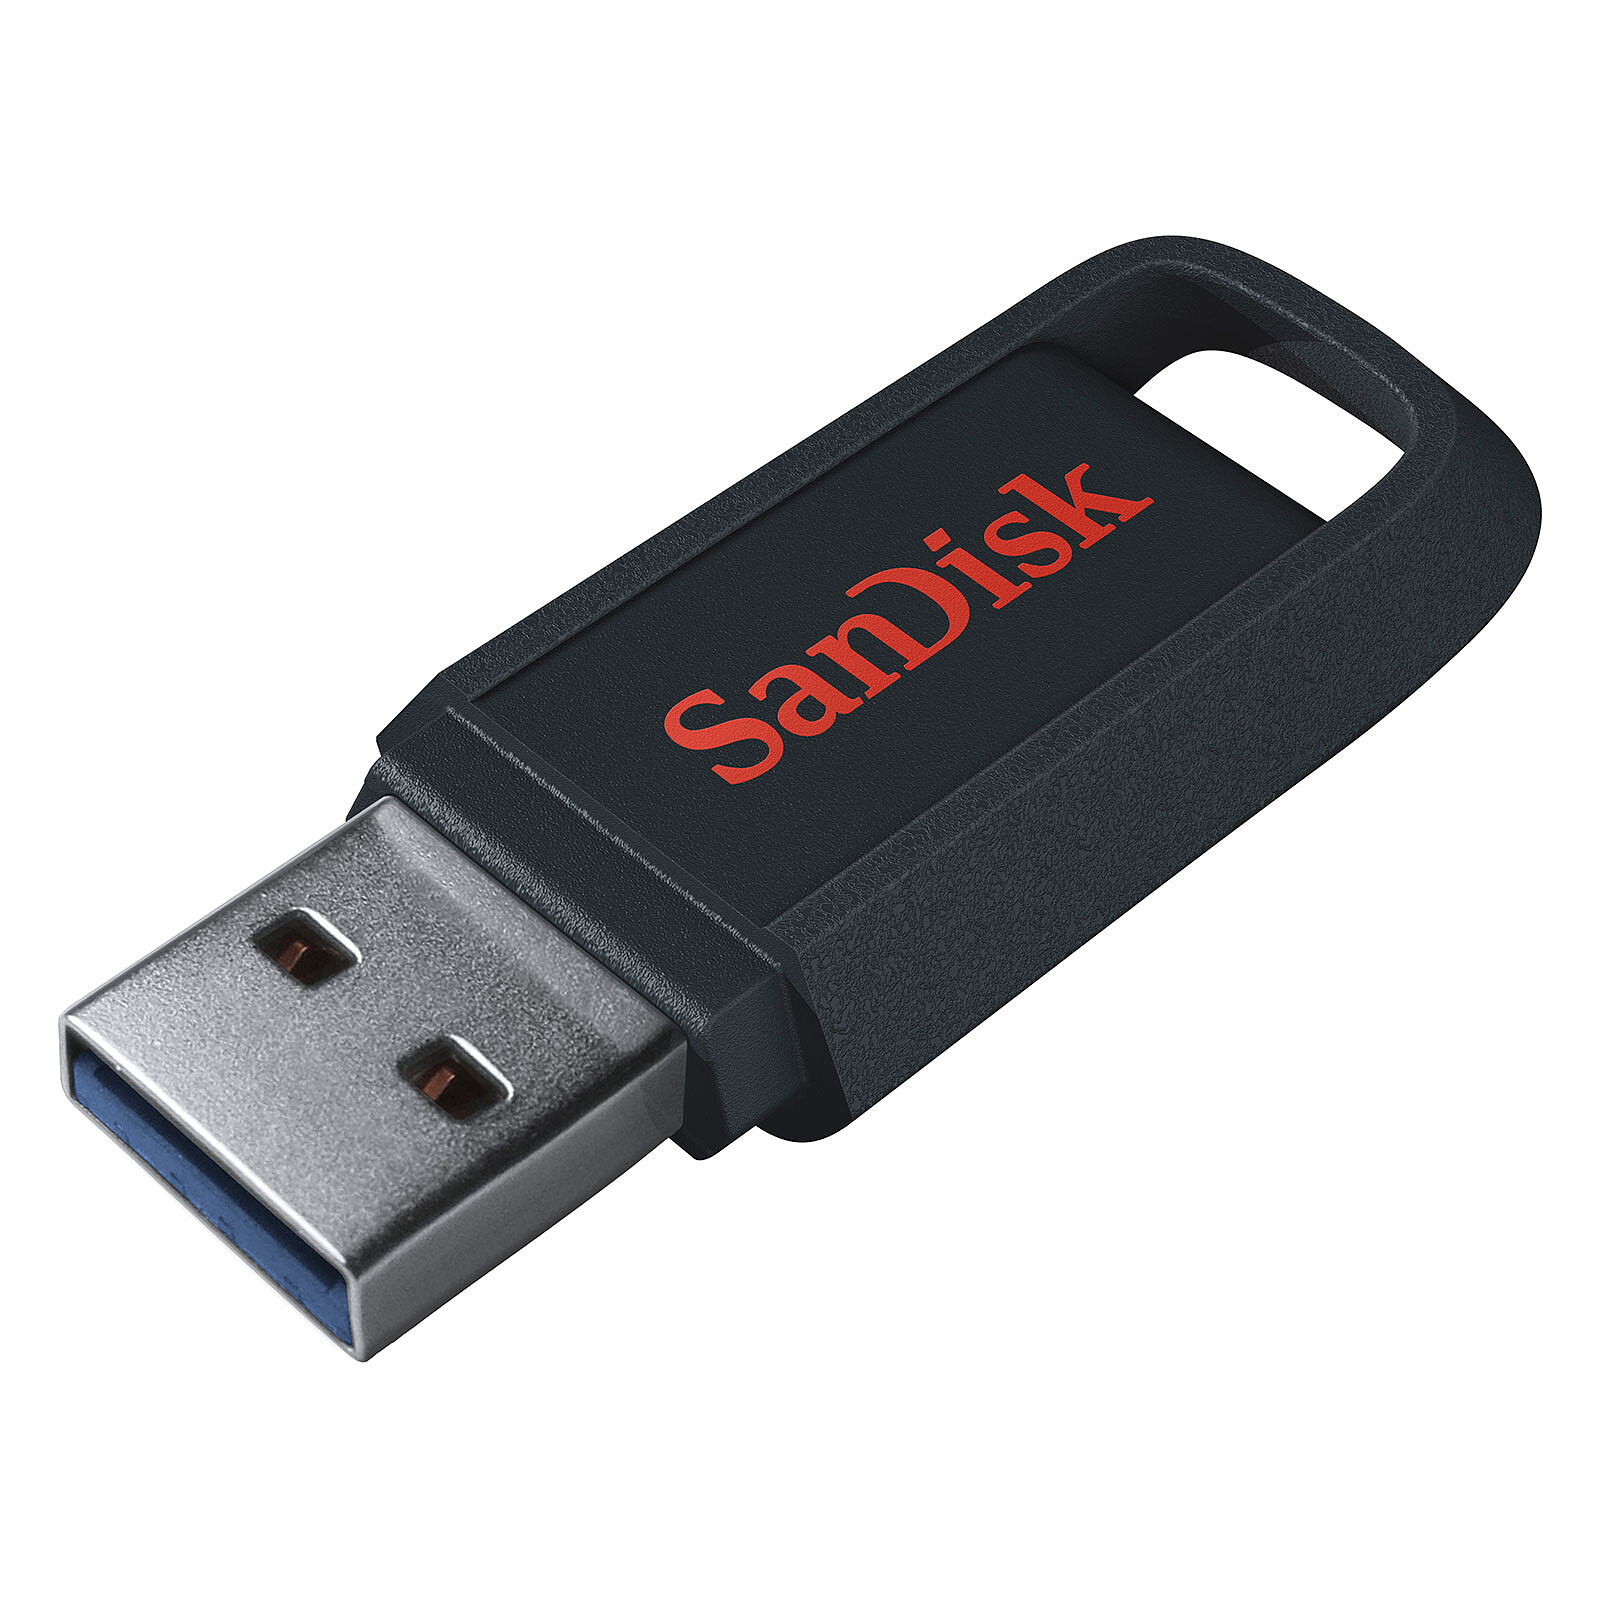 Купить флешку для интернета. Флешка SANDISK 64 GB USB 3.0. USB флешка 64 GB SANDISK. Флеш накопитель 64gb SANDISK. SANDISK 128gb USB 3.